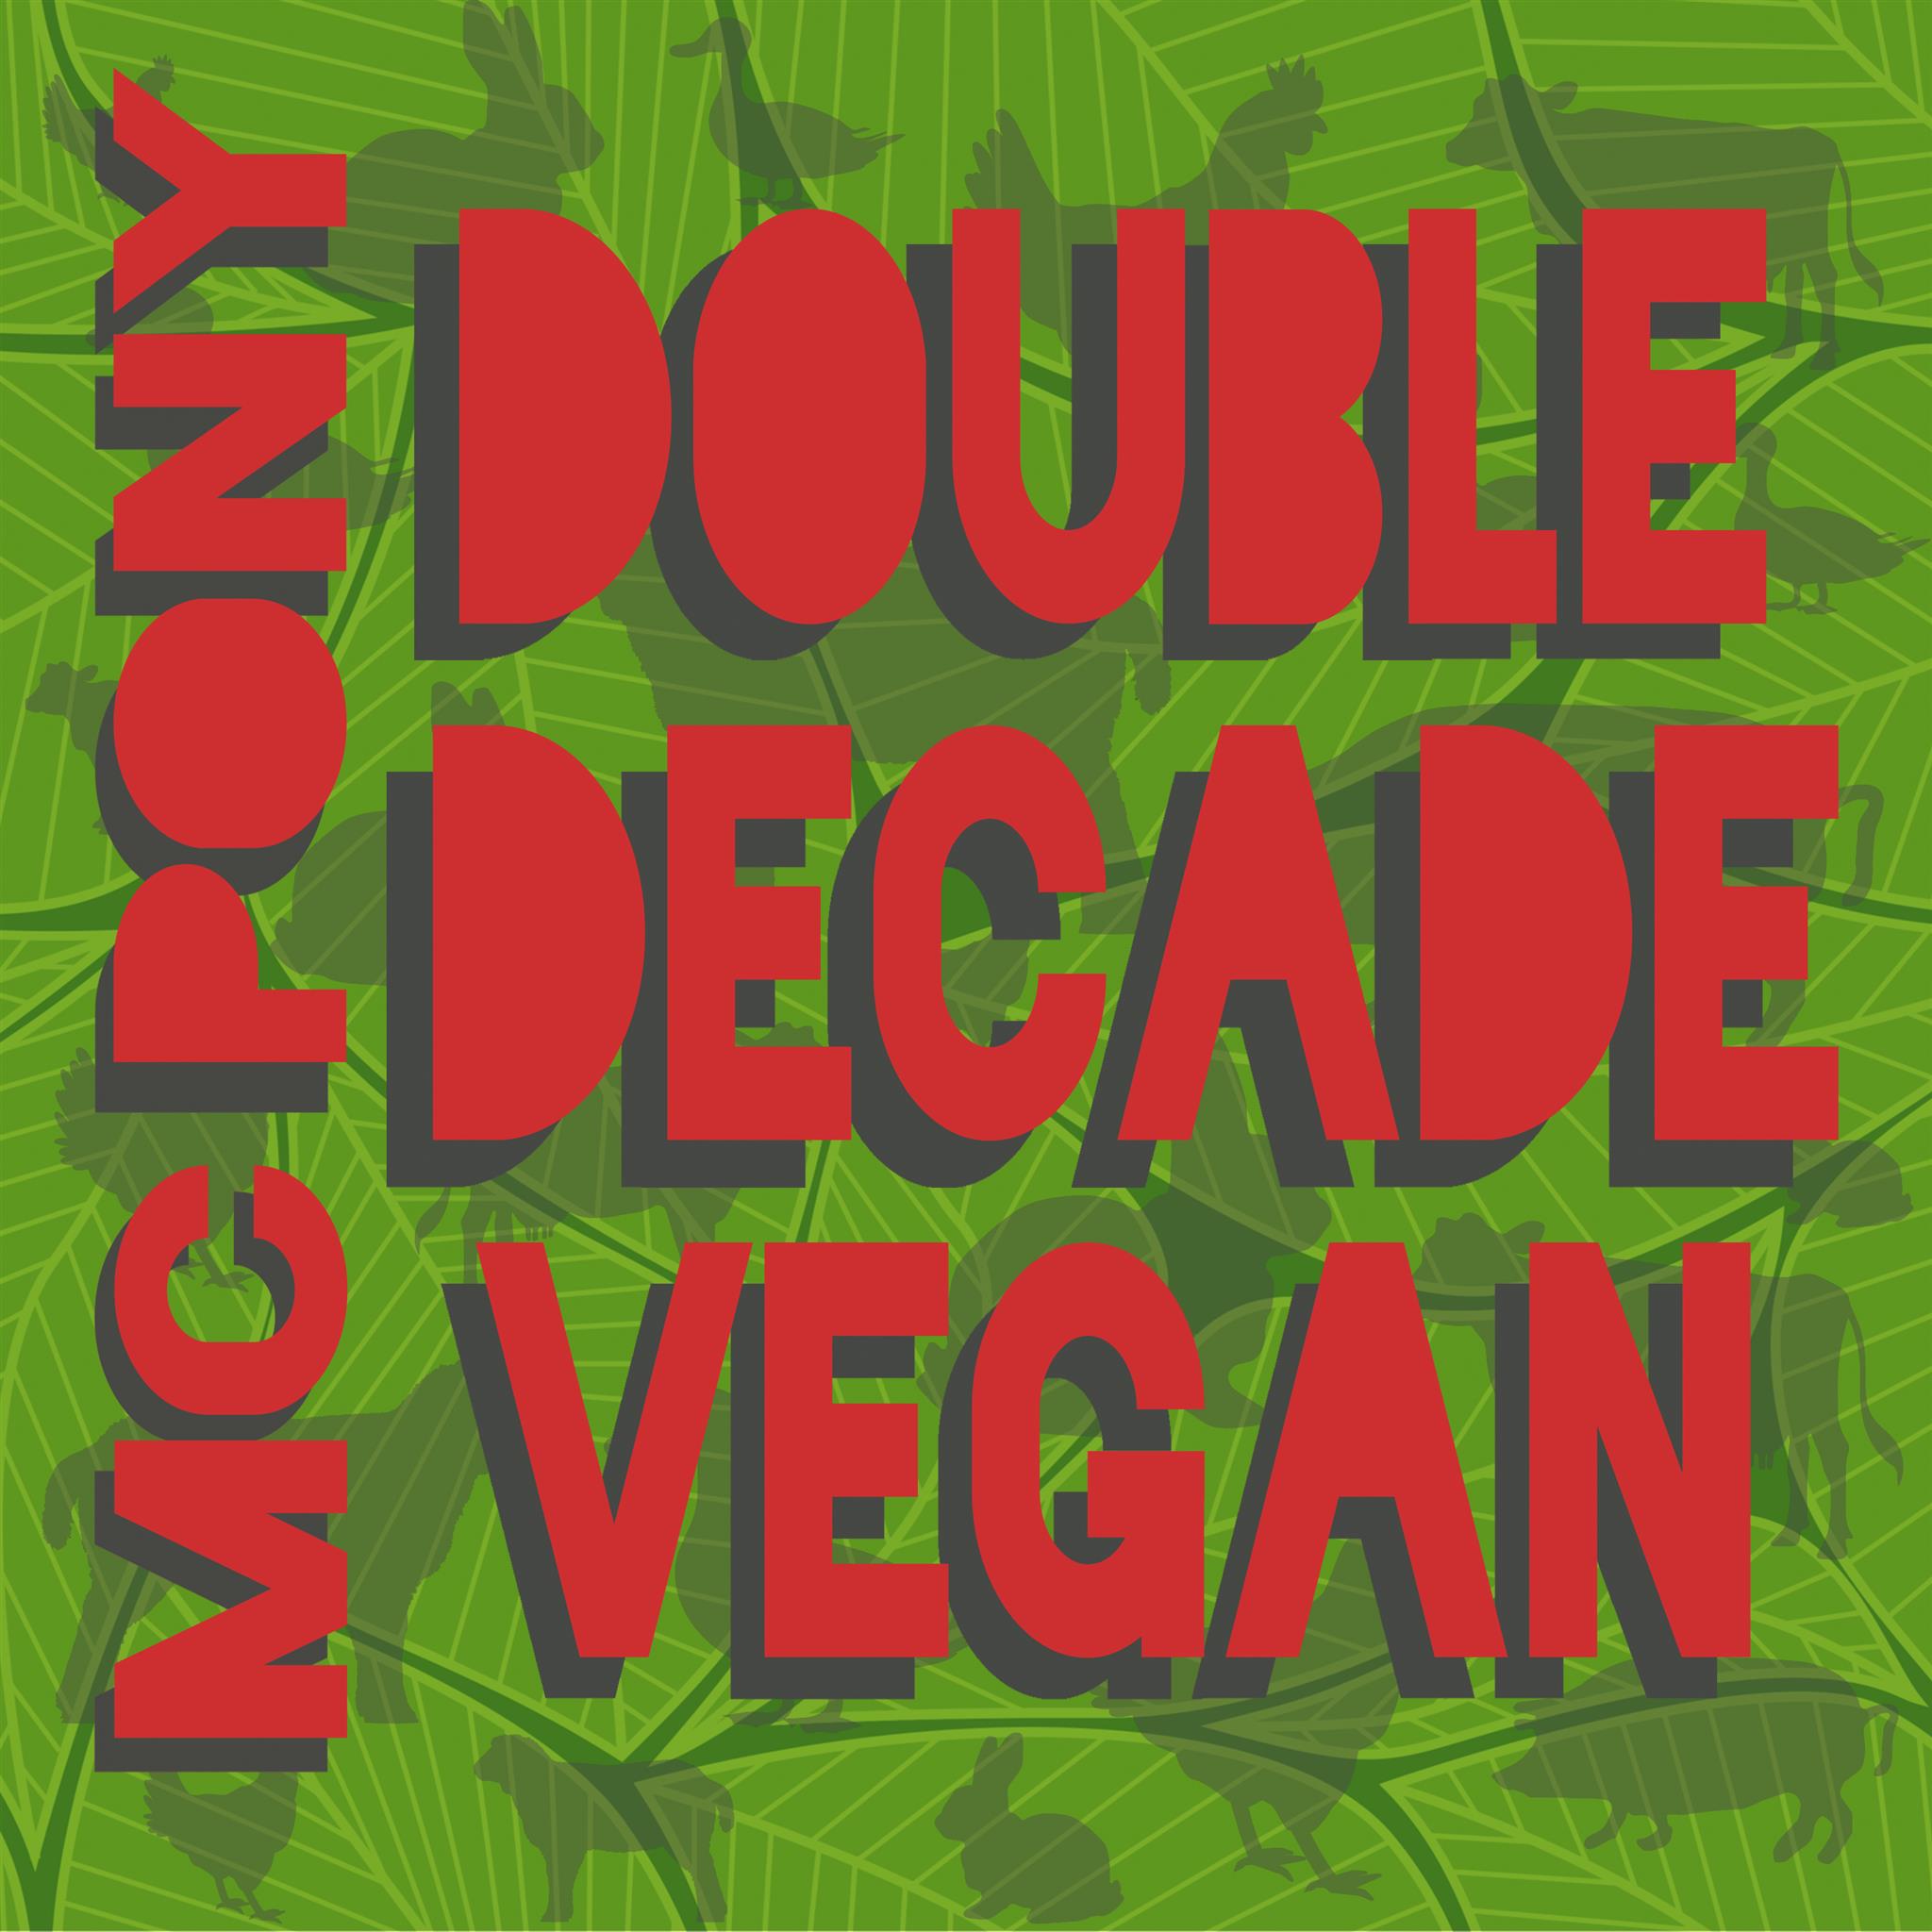 Double_Decade_Vegan_coverartlowres